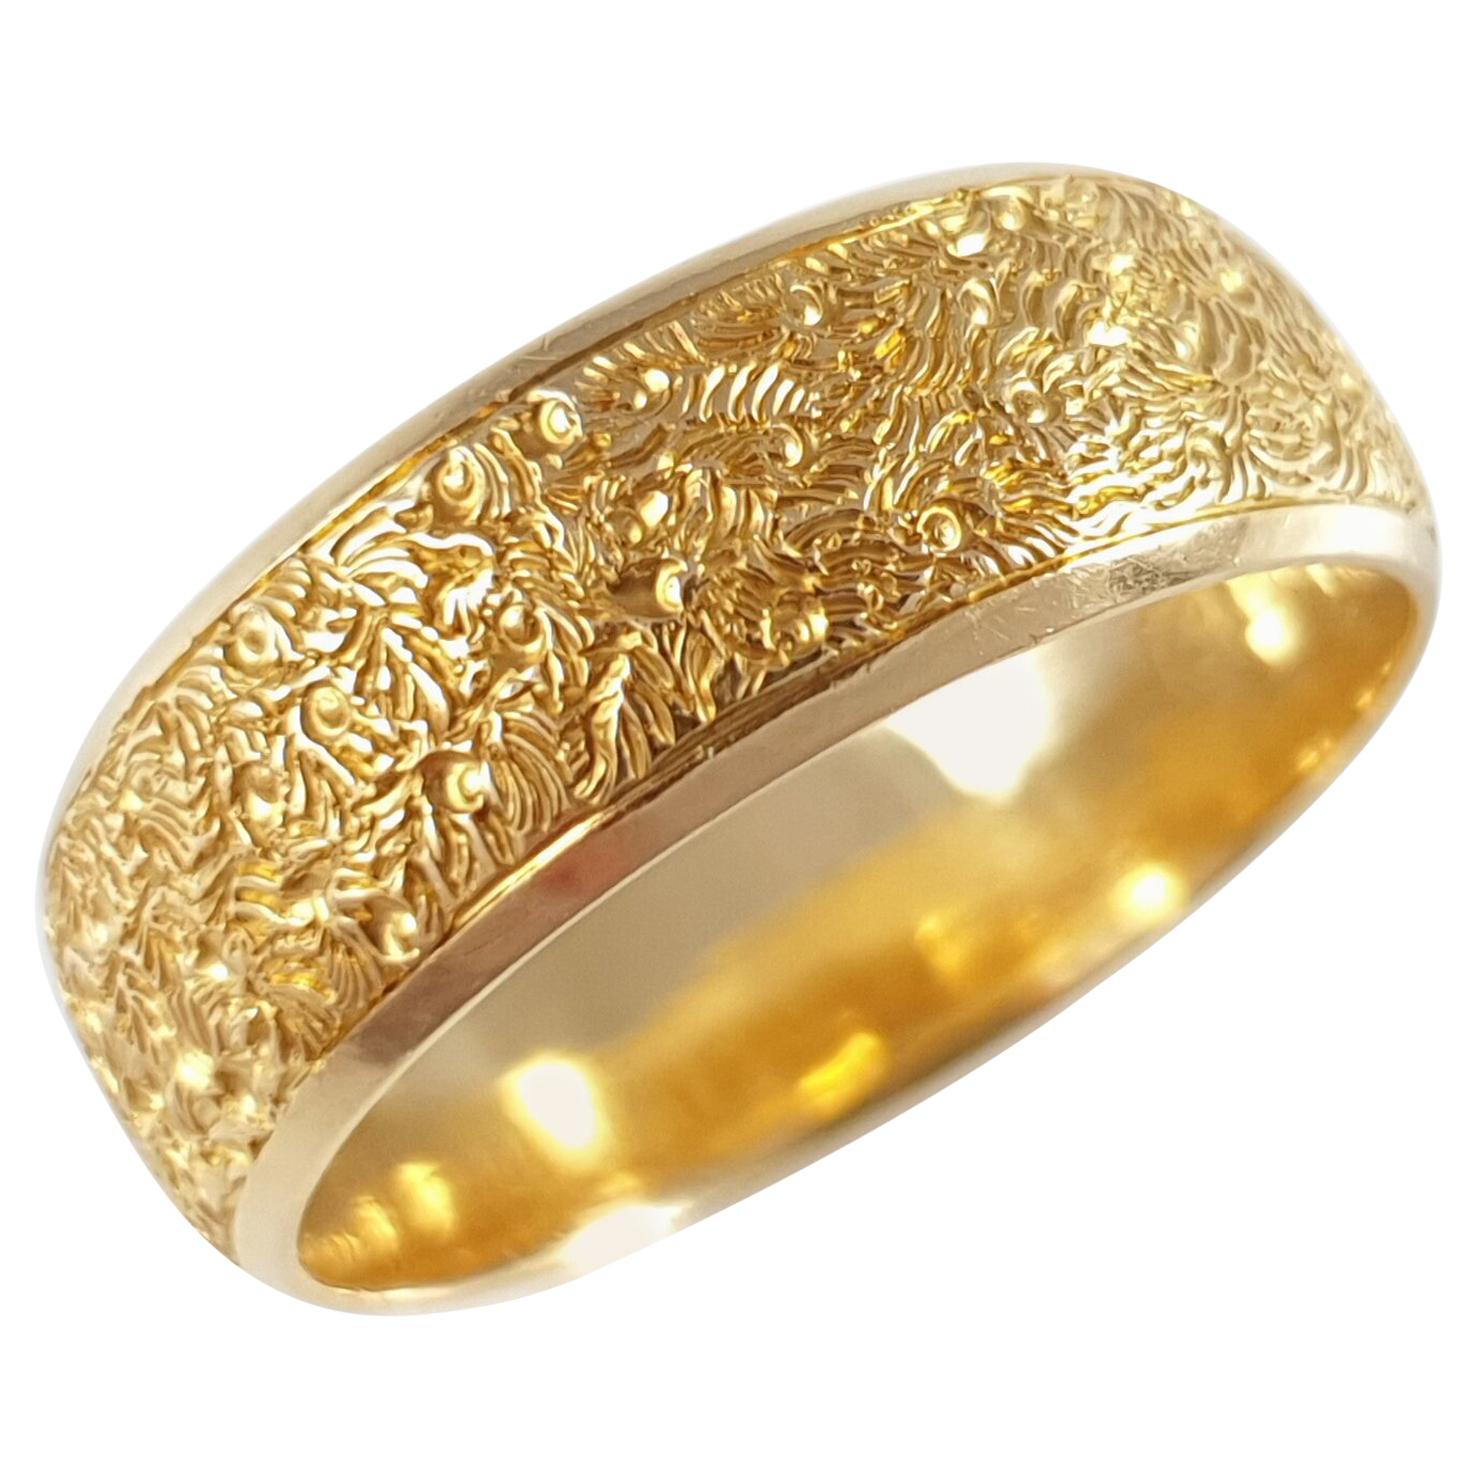 Antique Victorian 18 Karat Yellow Gold Engraved Wedding Band Ring 1881